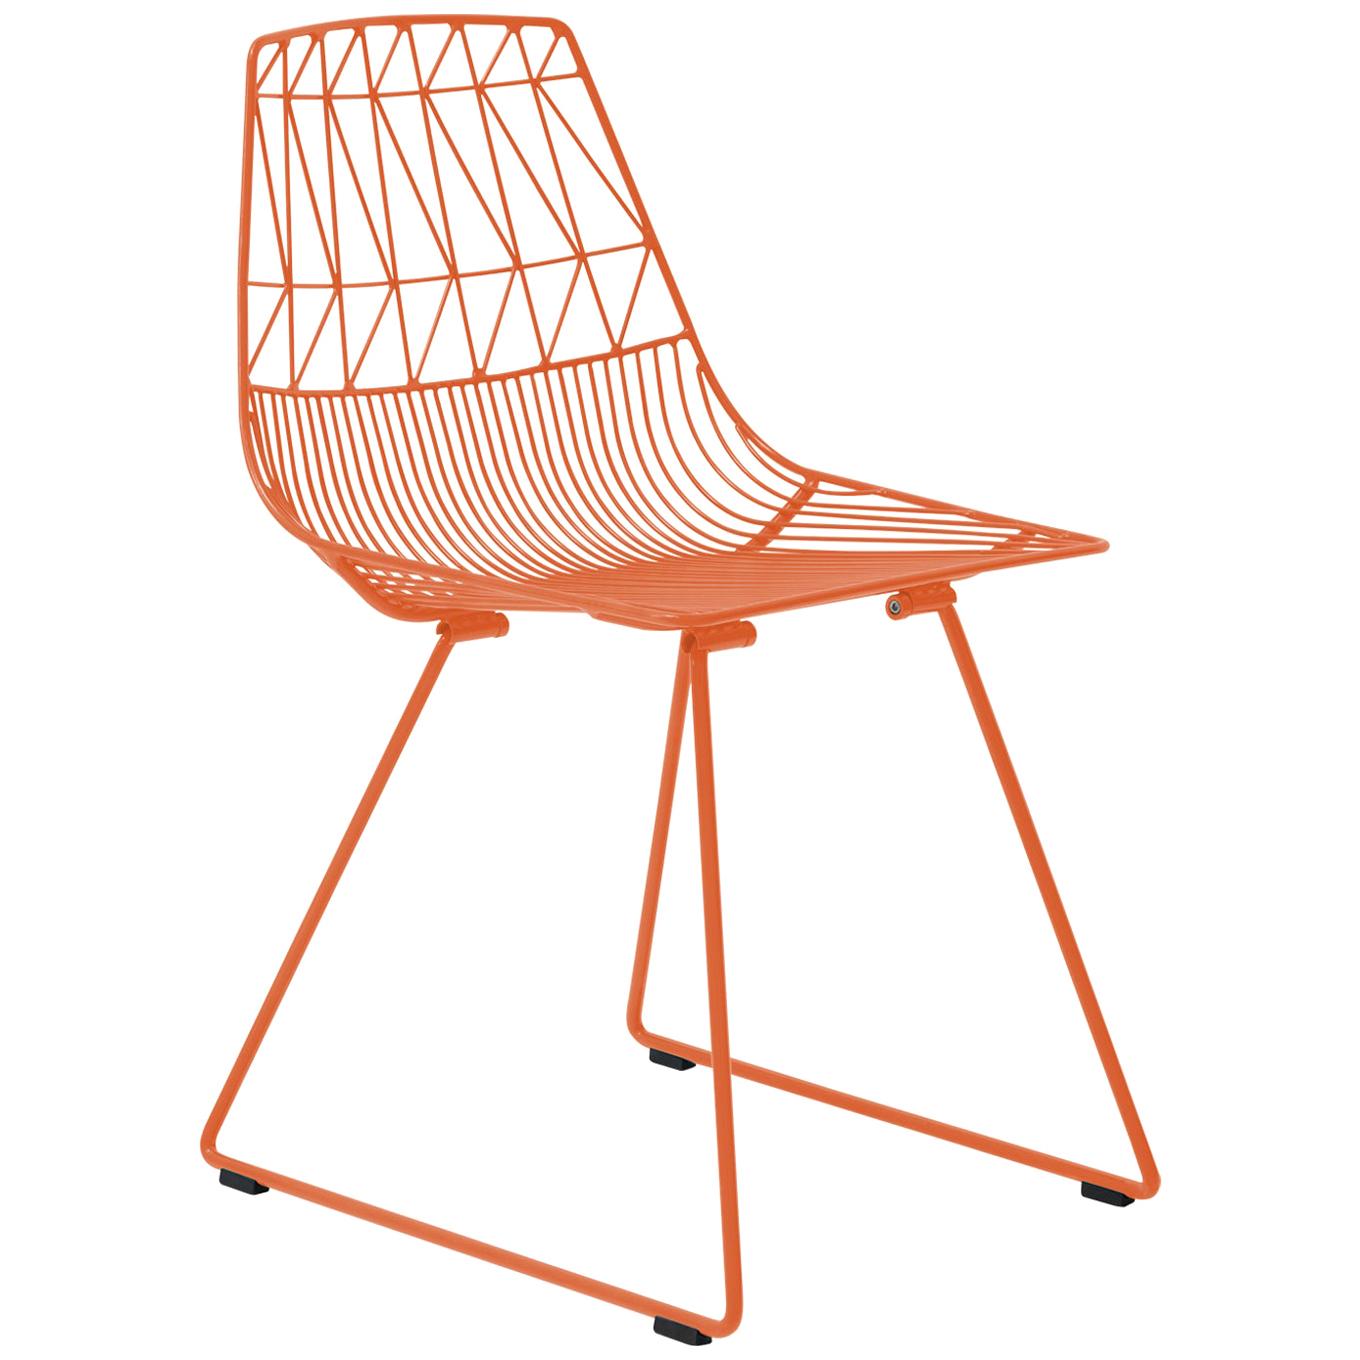 Mid-Century Modern, Minimalist Wire Chair, Lucy Chair in Orange by Bend Goods